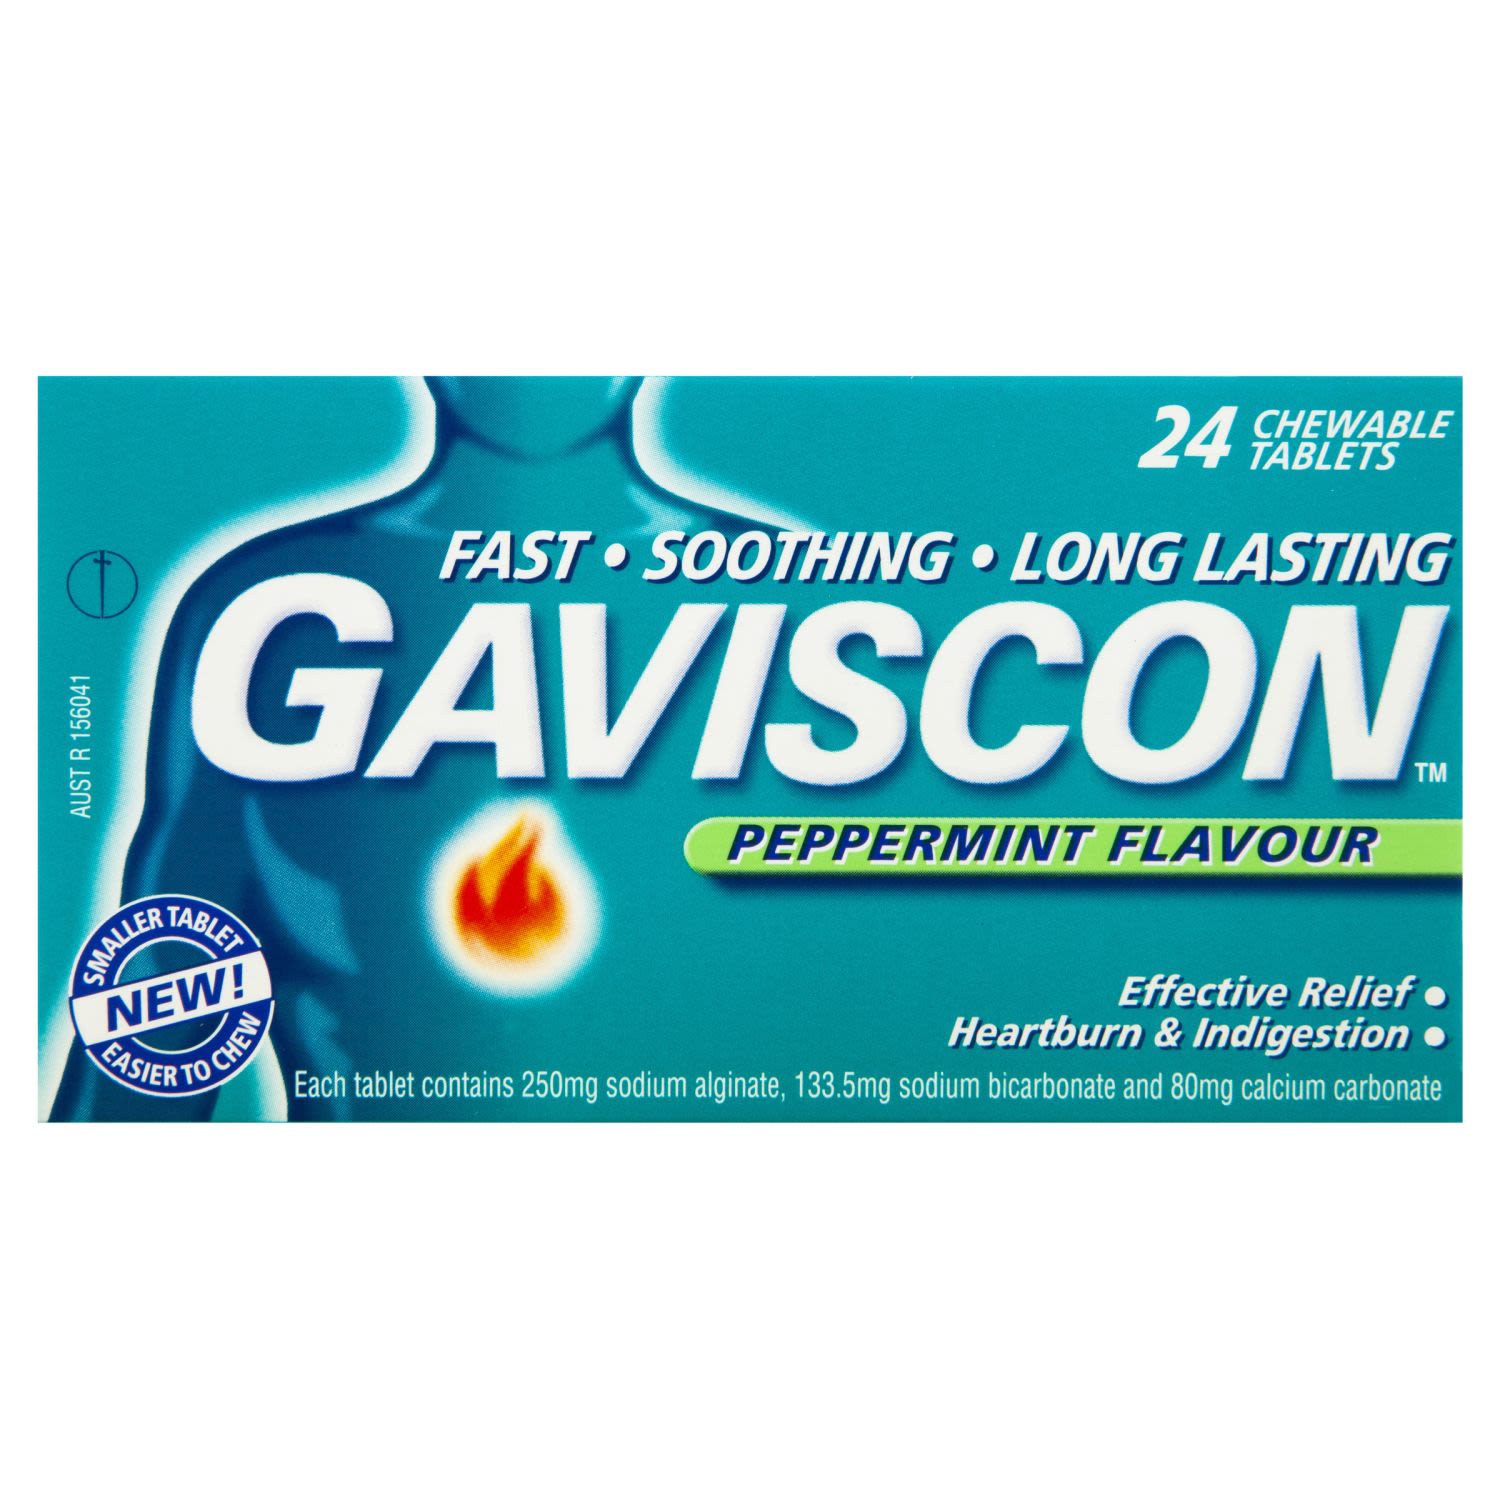 Gaviscon Chewable Tablets Peppermint Heartburn & Indigestion Relief, 24 Each